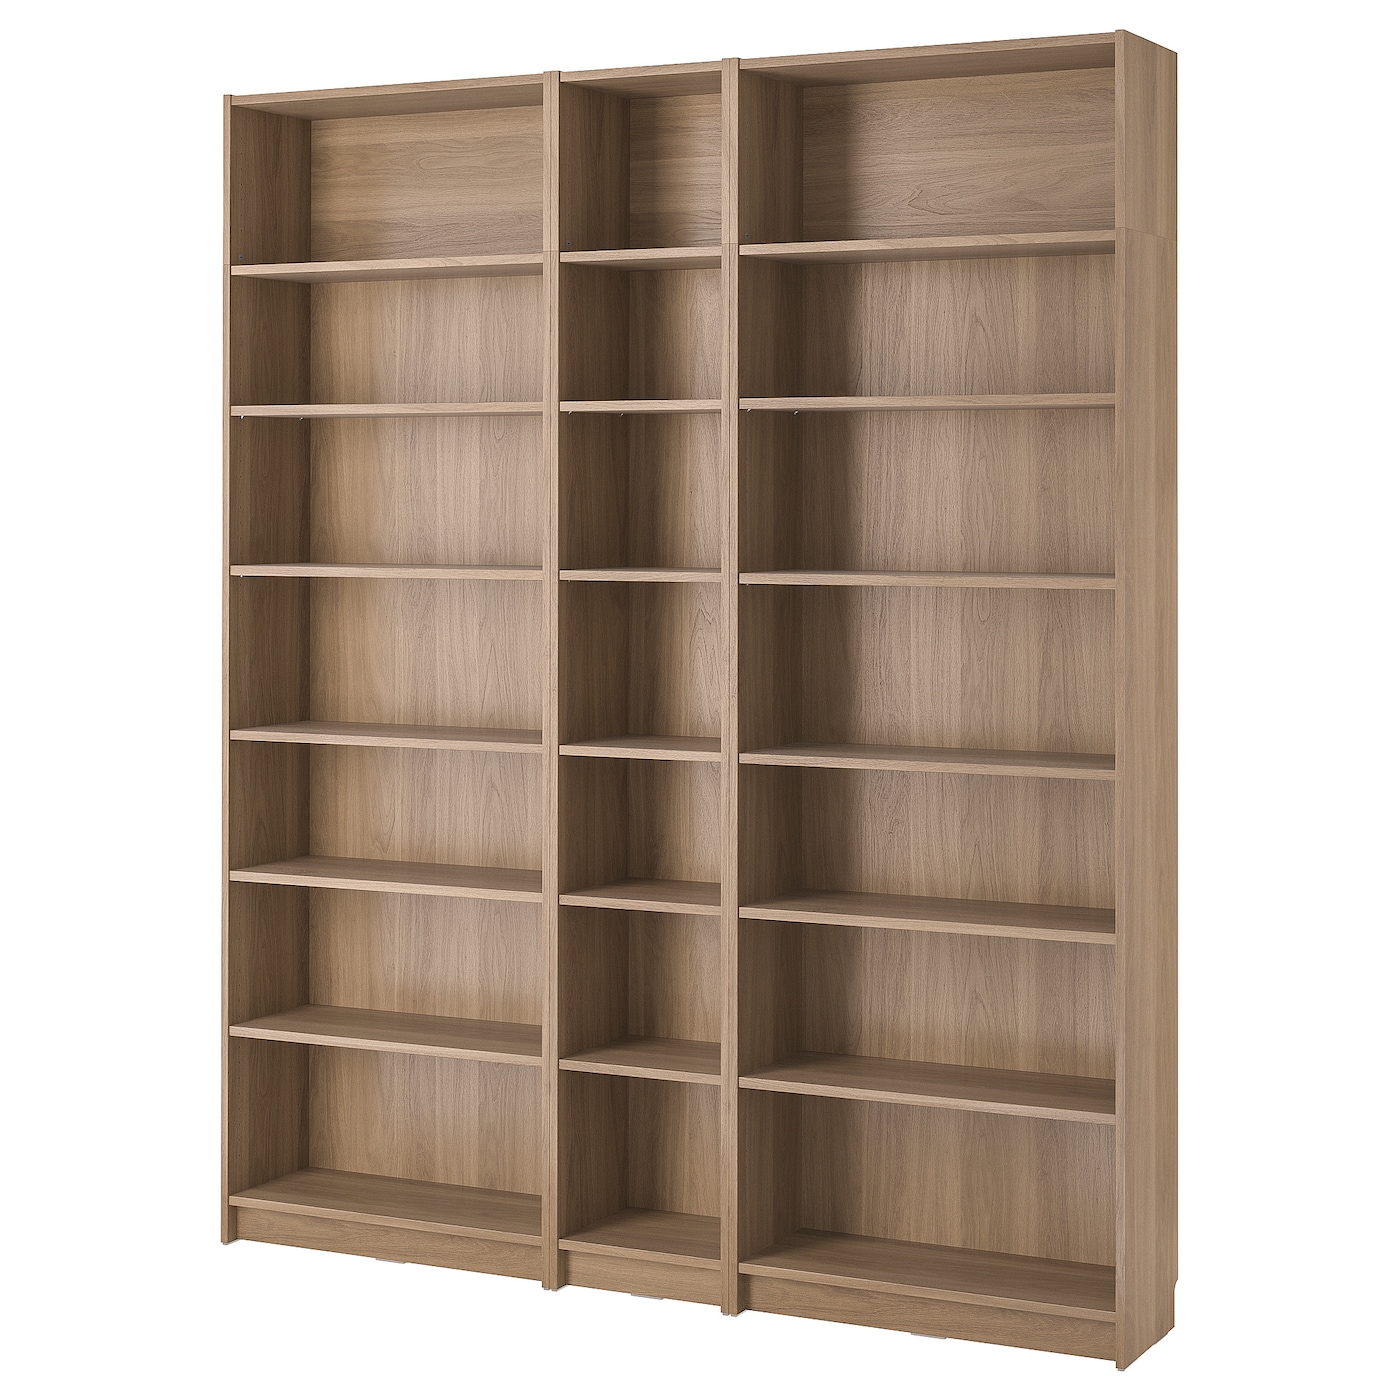 Книжный шкаф -  BILLY IKEA/ БИЛЛИ ИКЕА, 200х28х237 см,  под беленый дуб